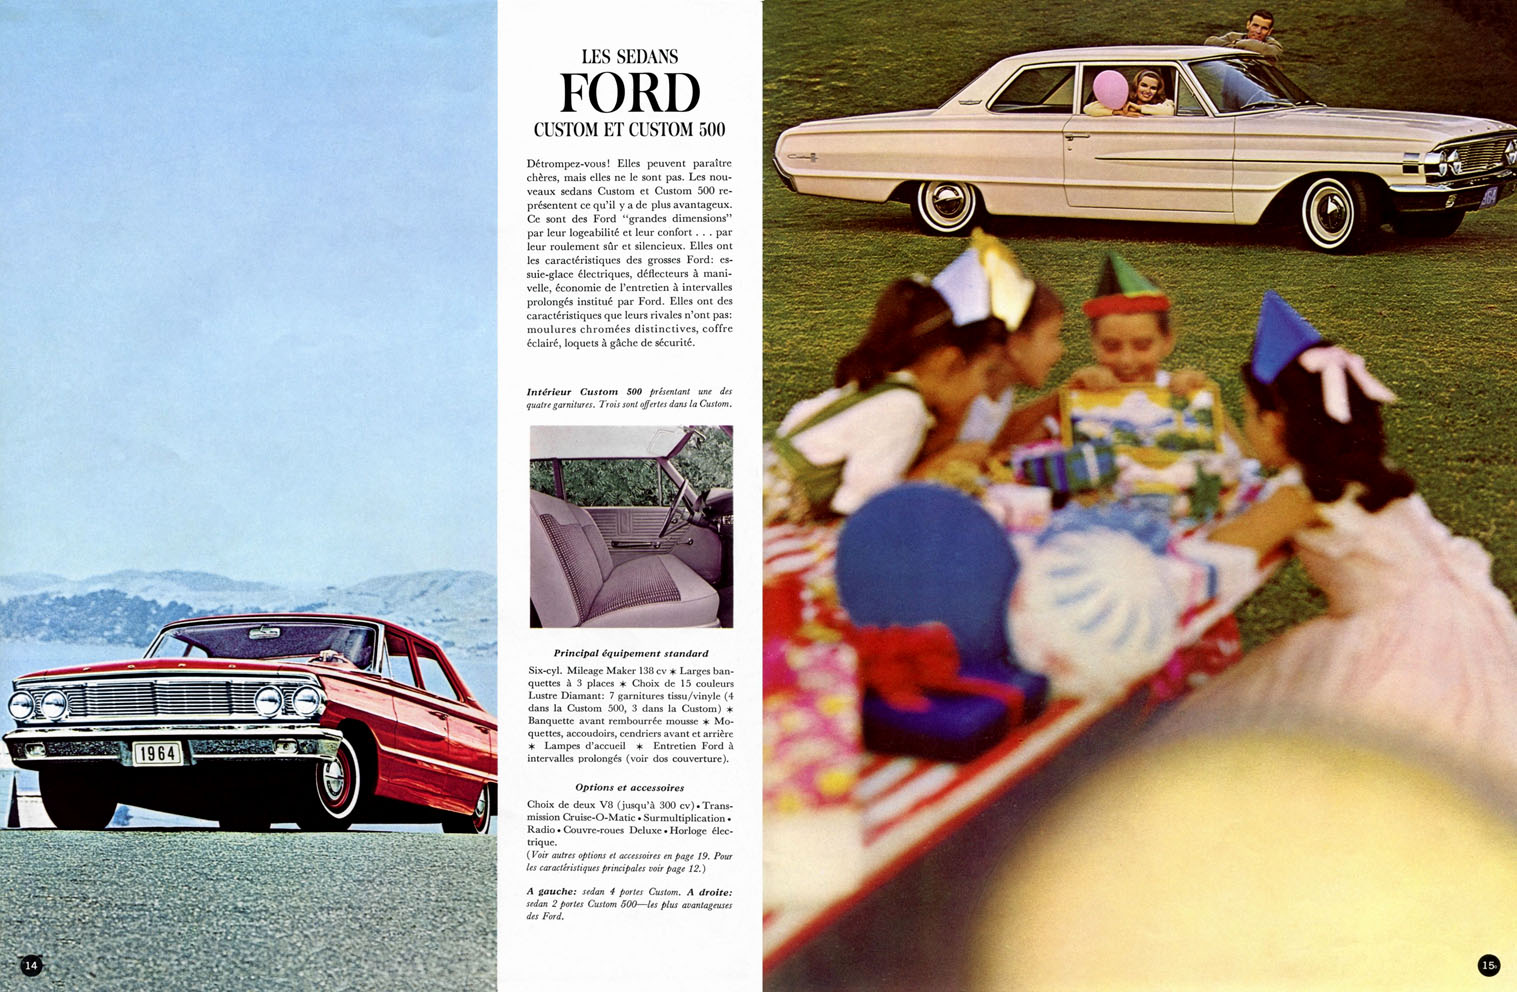 n_1964 Ford Full Size (Cdn-Fr)-14-15.jpg